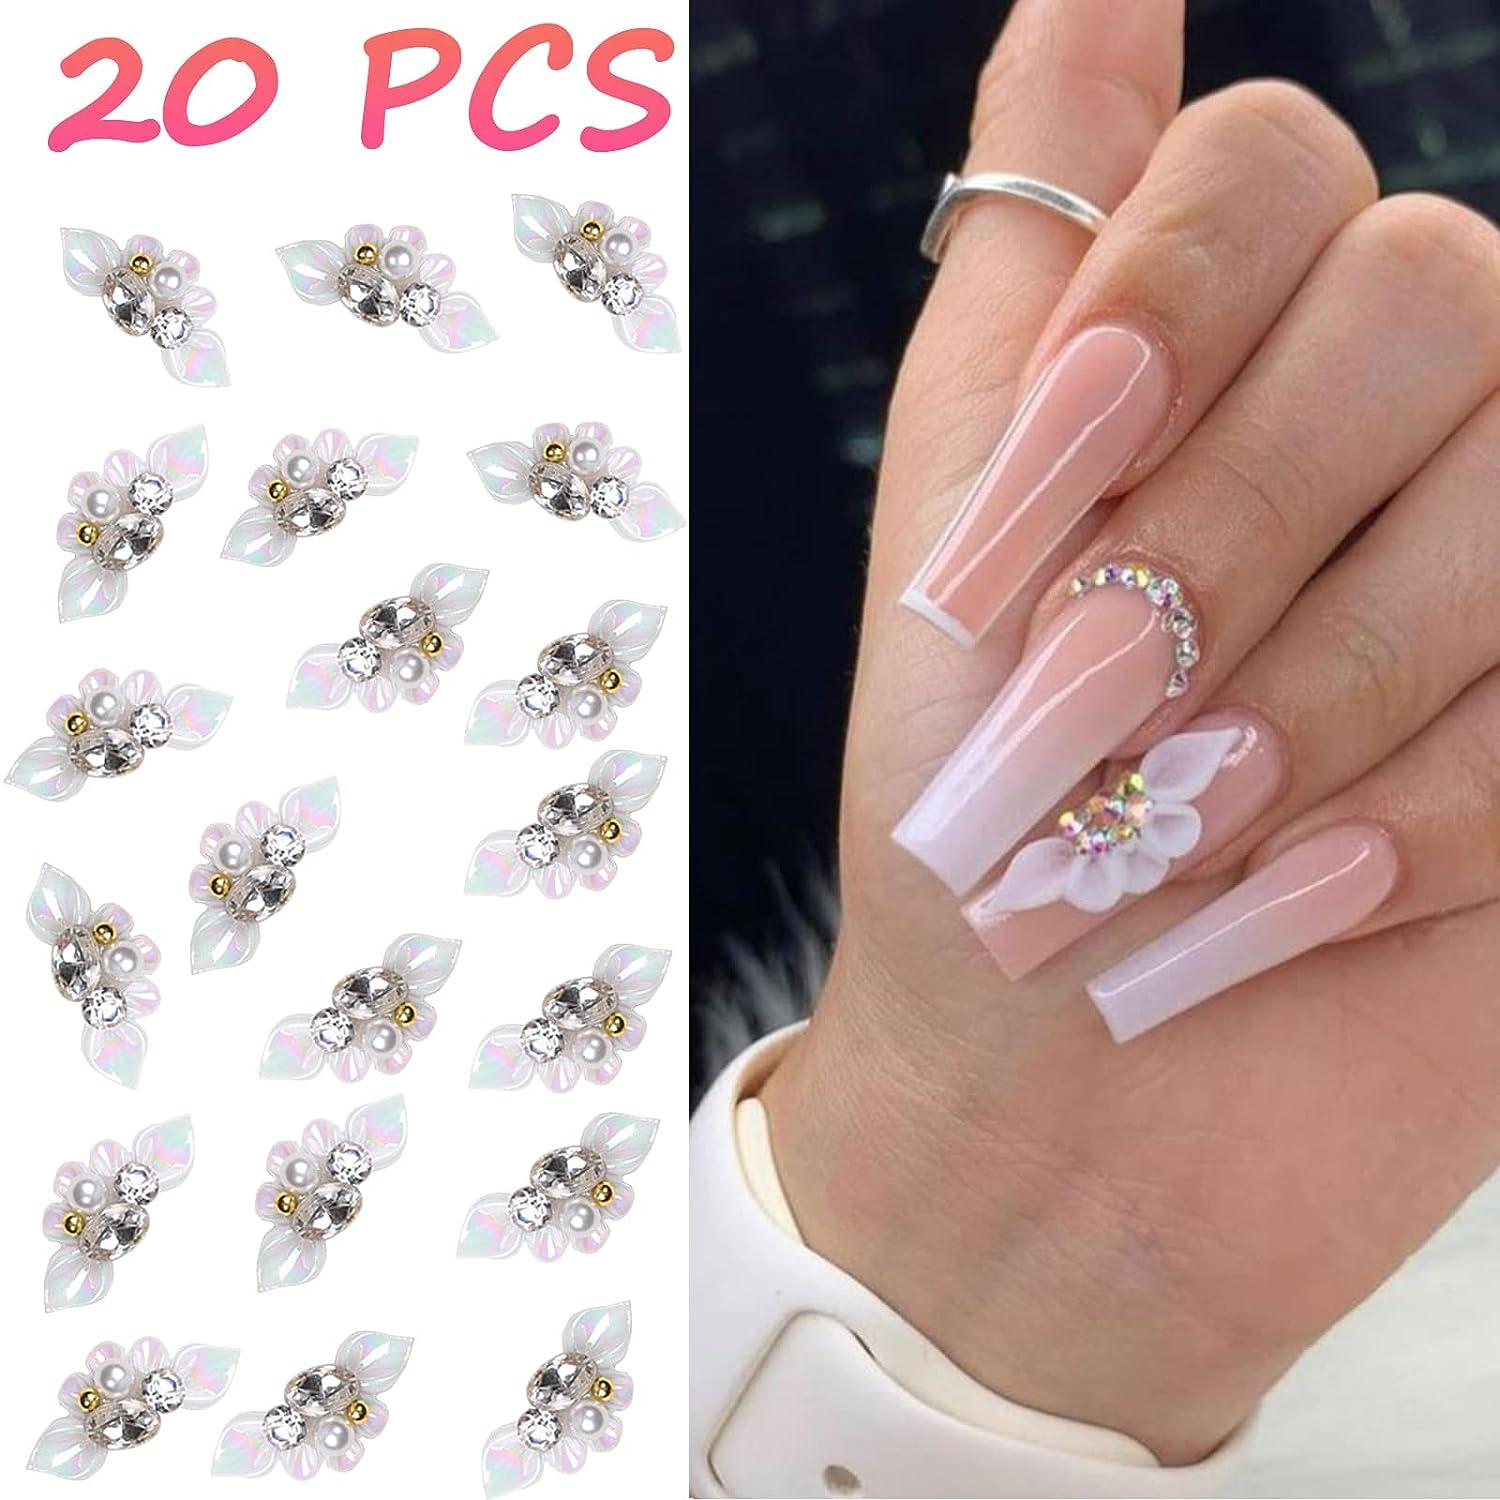 YOSOMMK 20PCS 3D Nail Charms Flower Nail Art Charms for Nail Gems